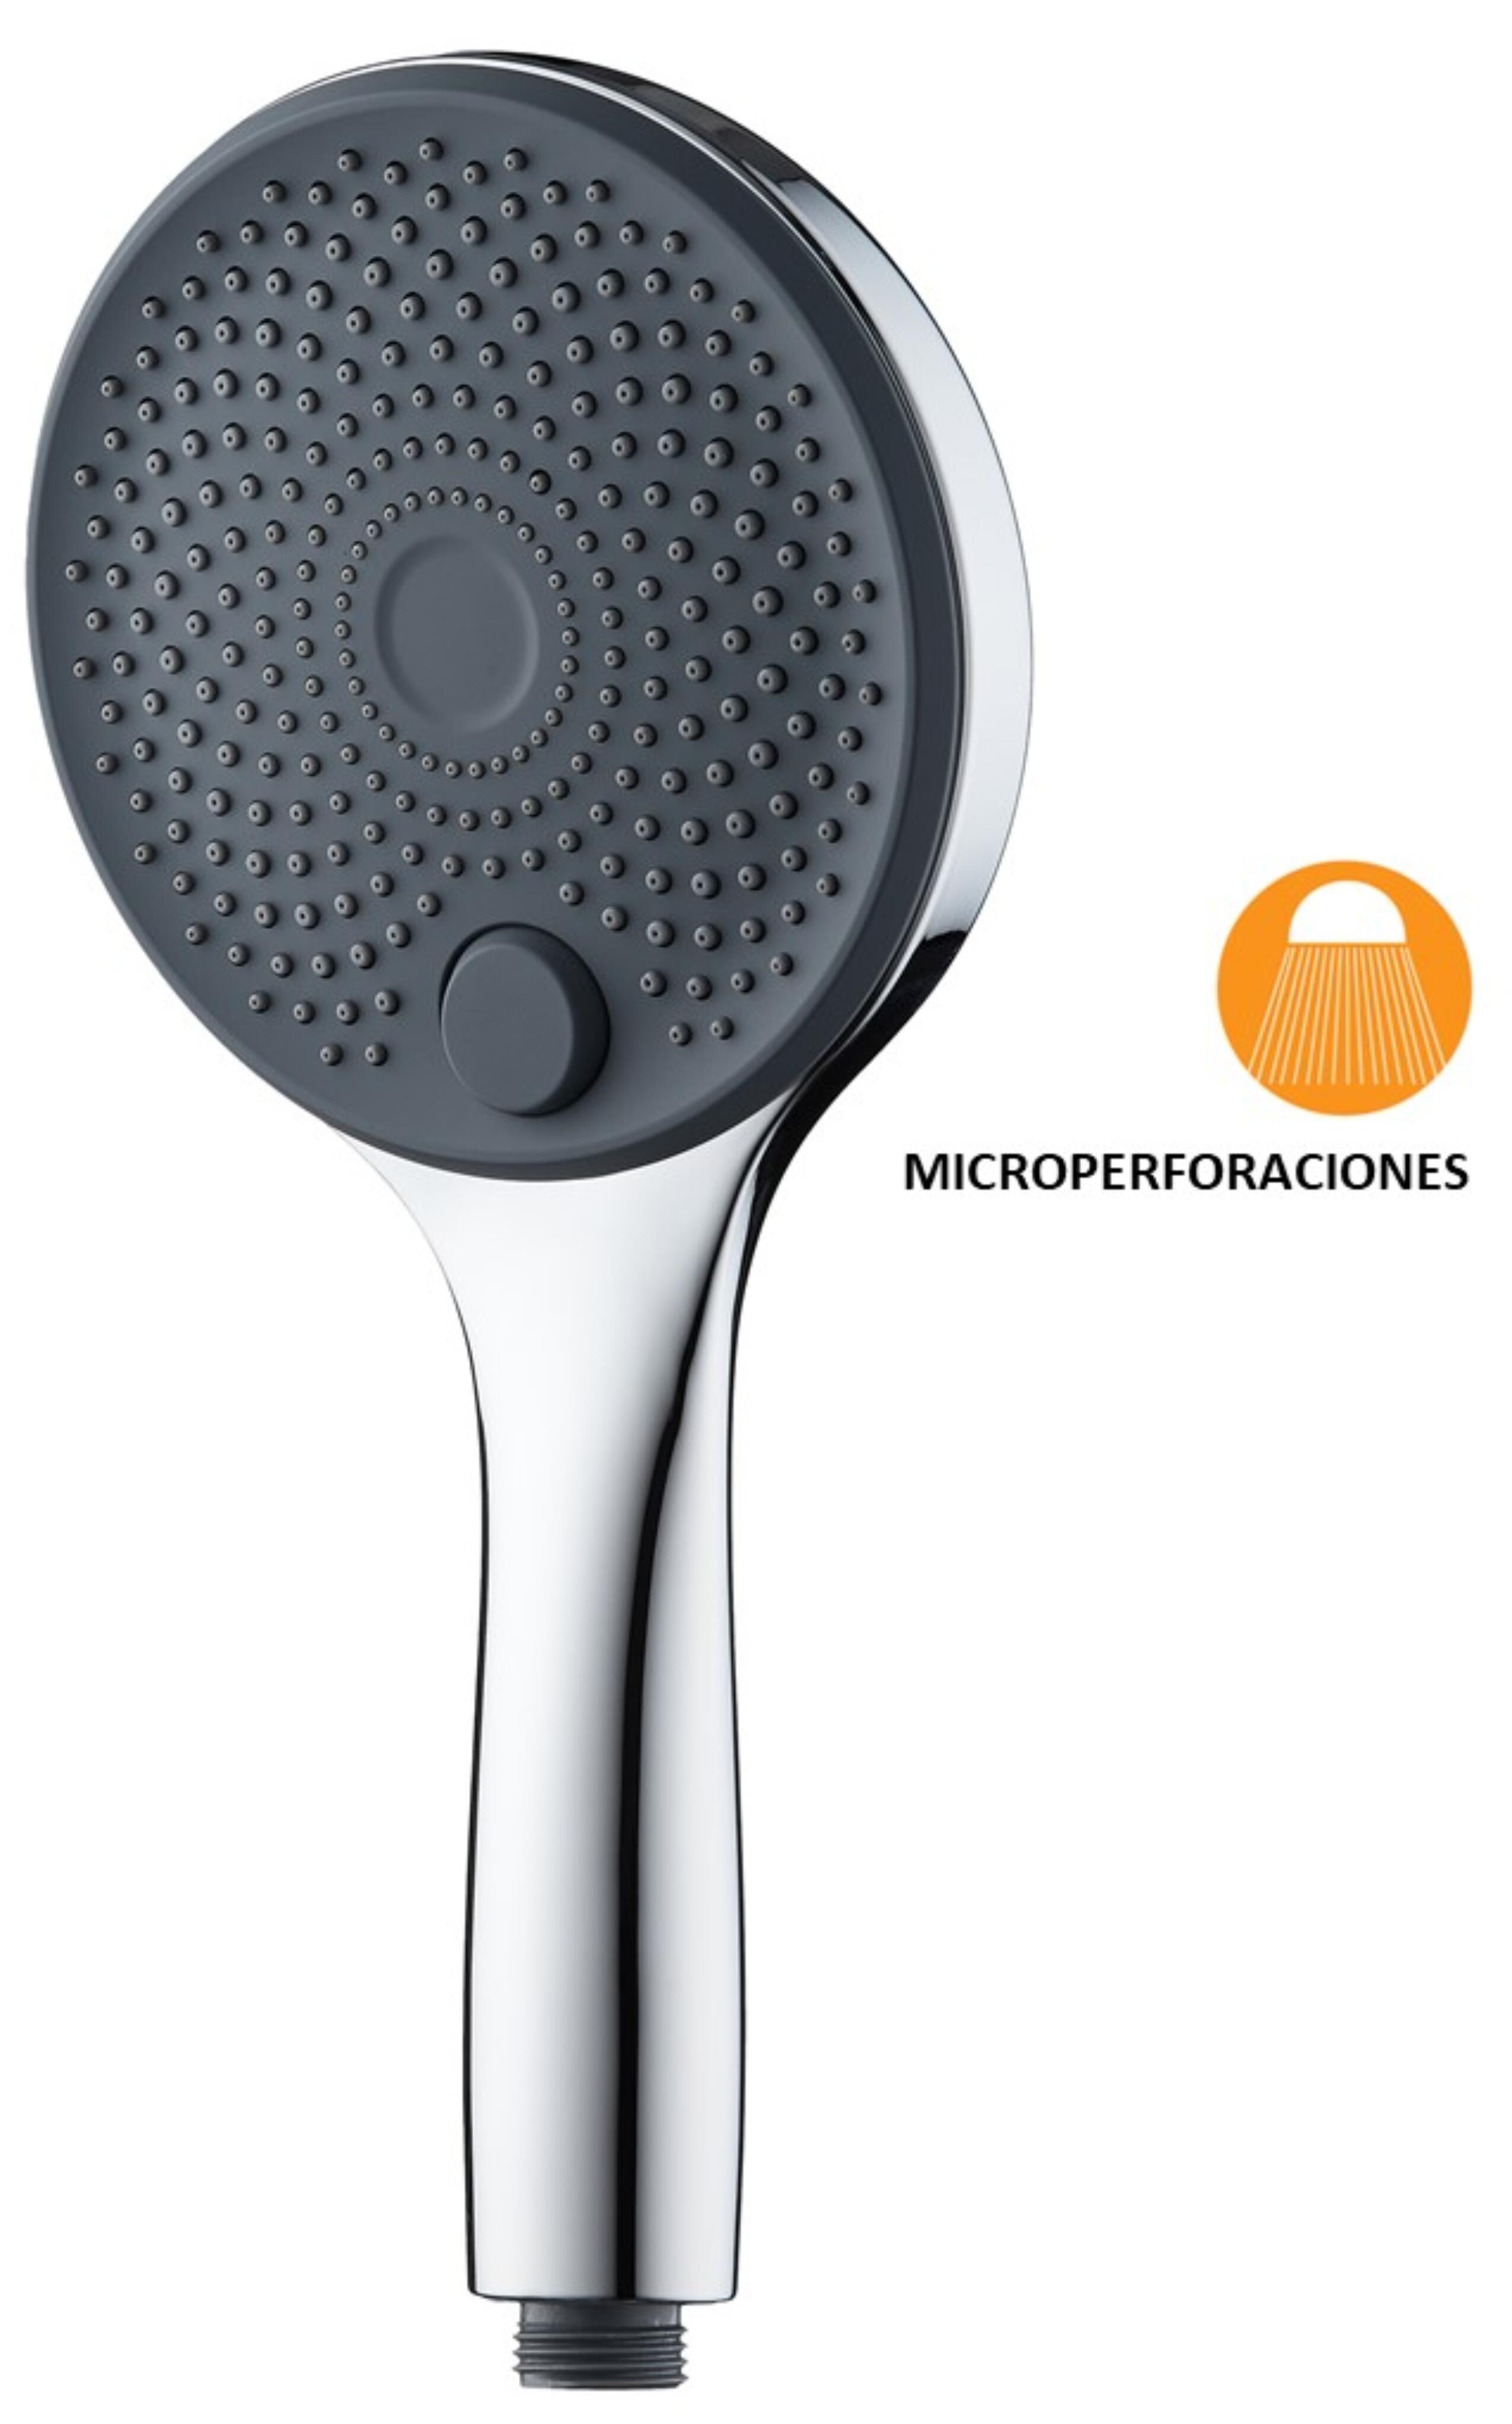 Alcachofa de ducha edouard rousseau microperforacion cromado con 3 funciones